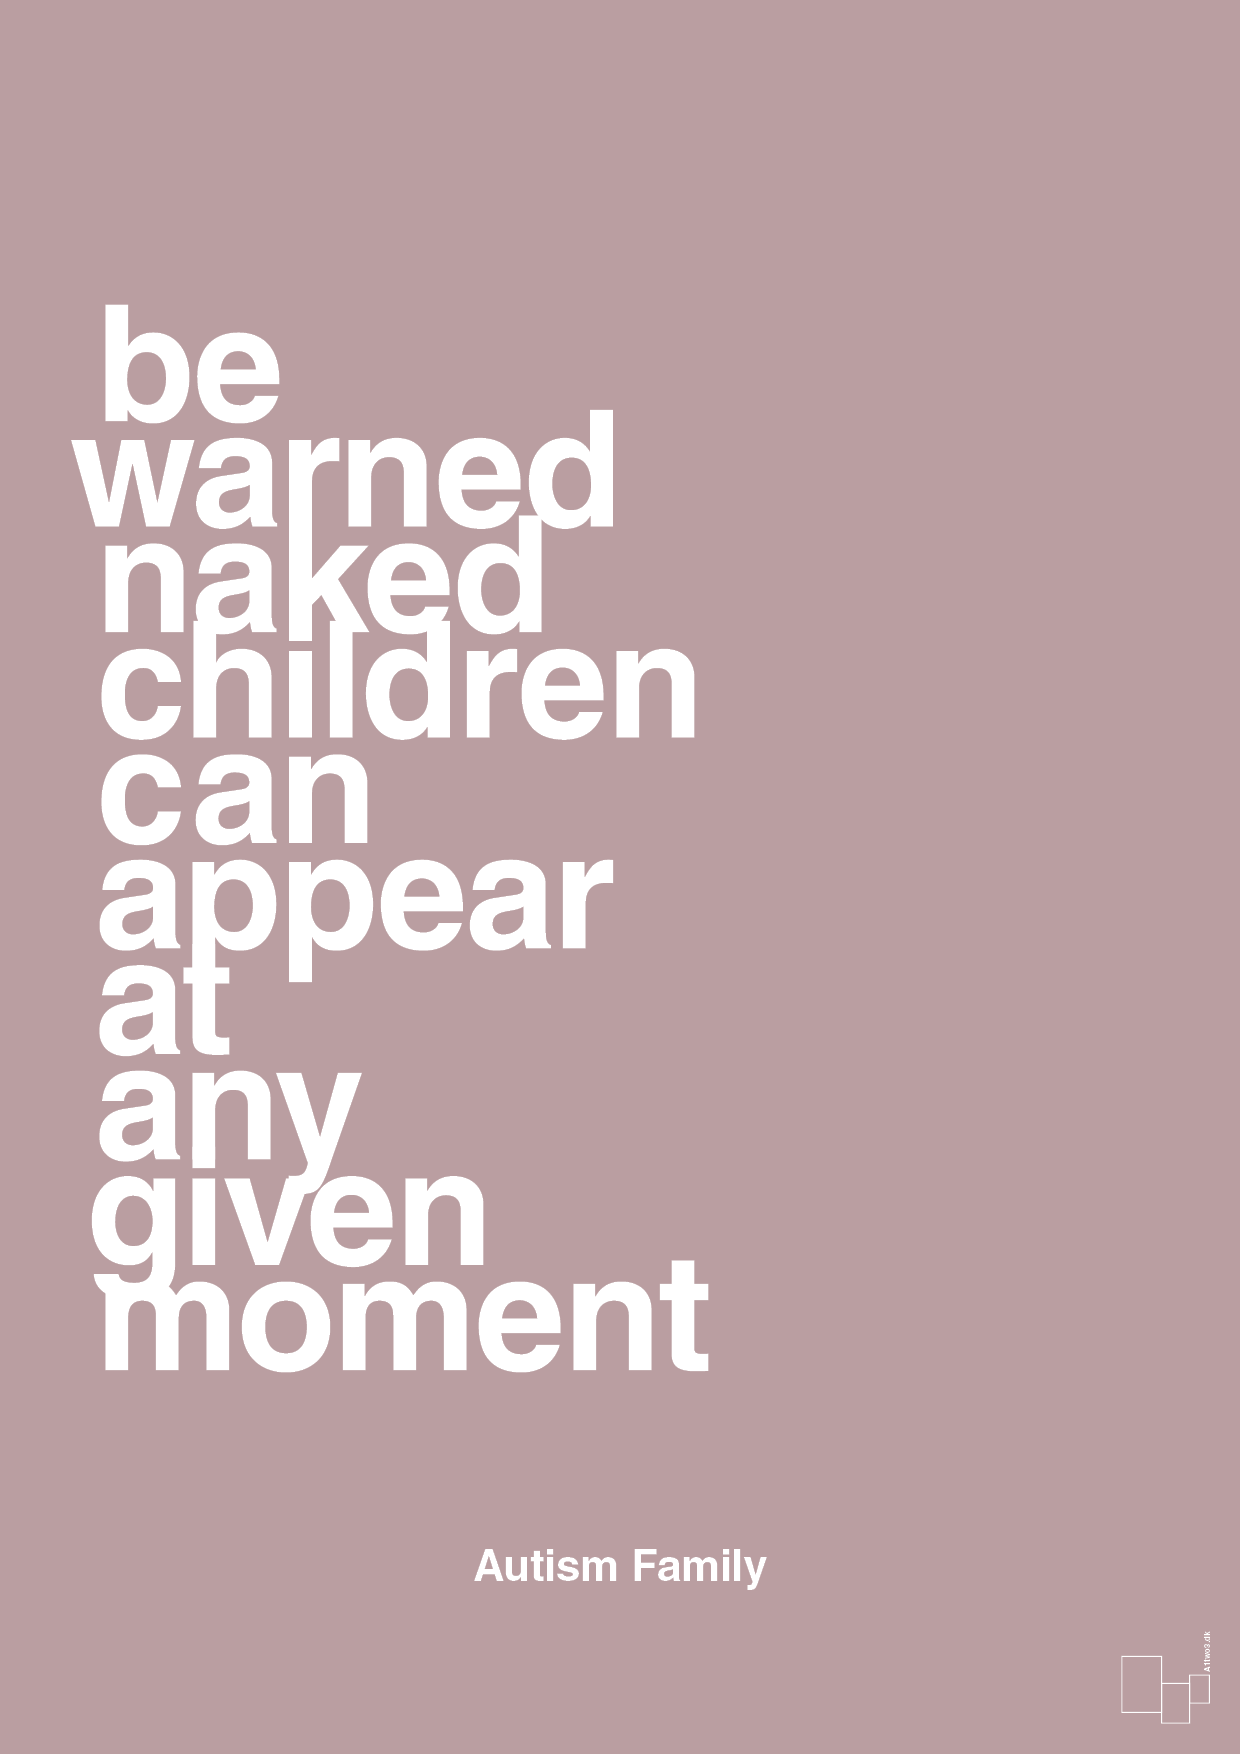 be warned naked children can appear at any given moment - Plakat med Samfund i Light Rose